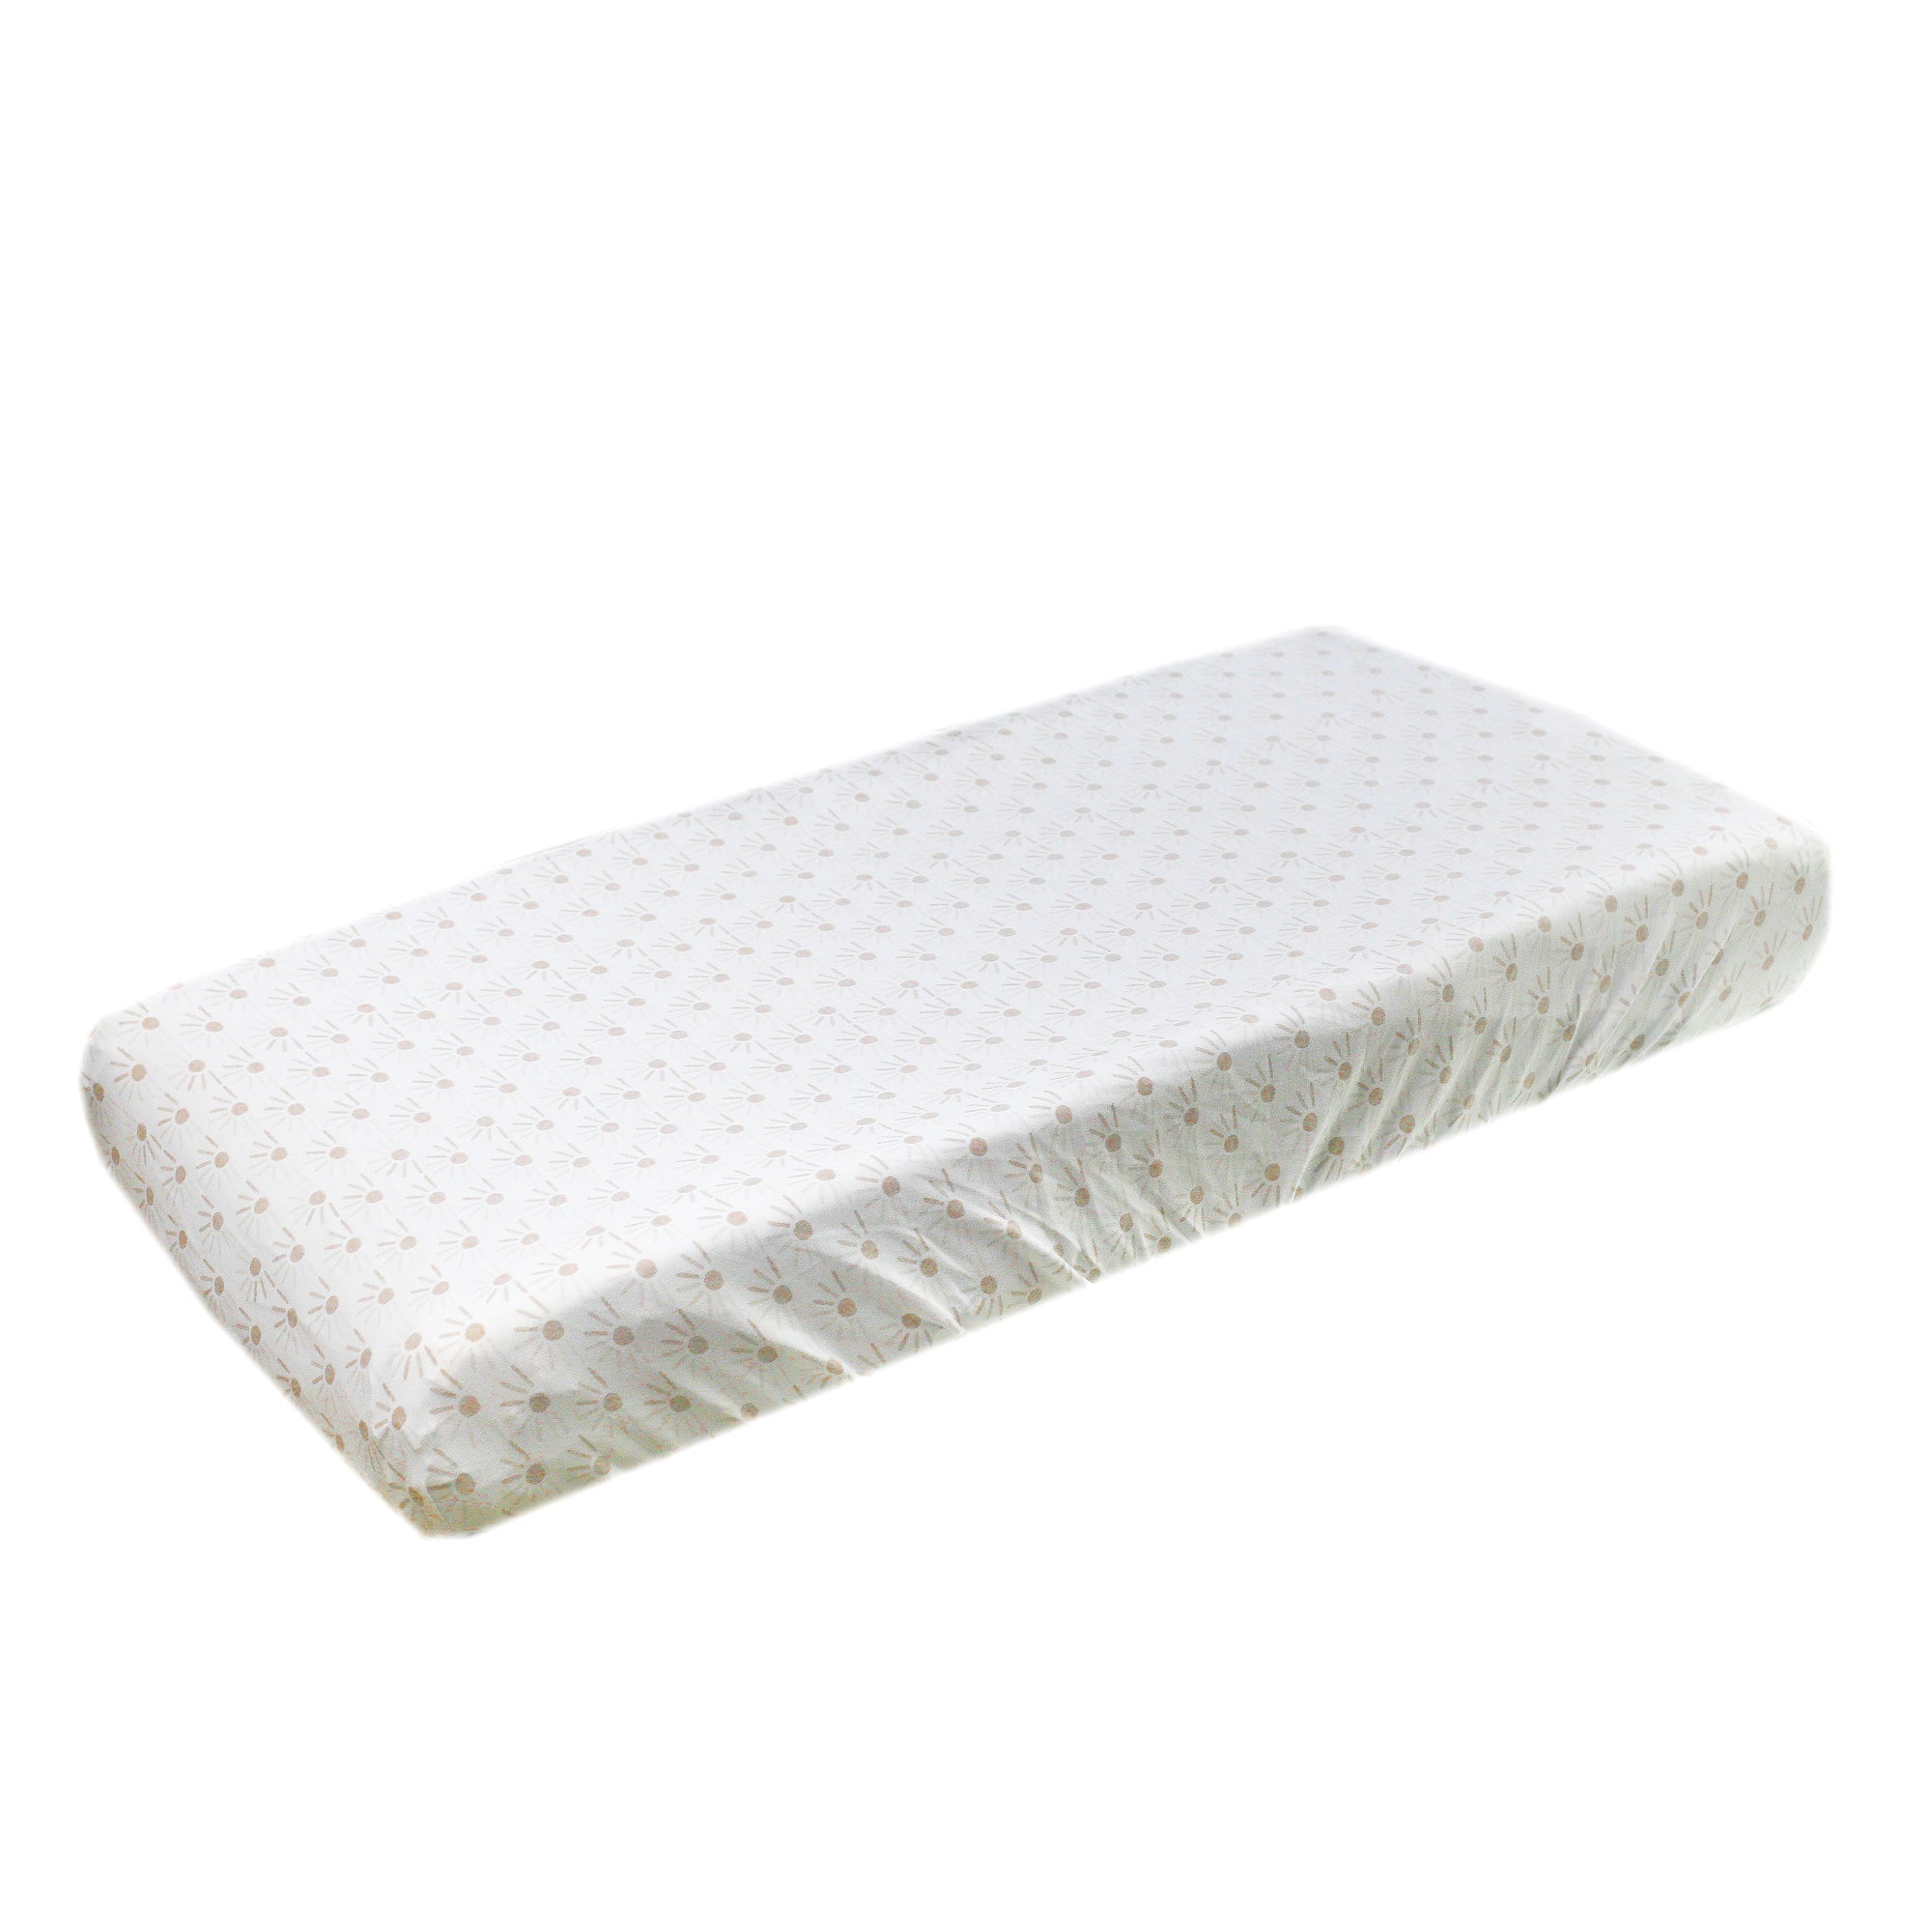 Premium Knit Diaper Changing Pad Cover - Shine